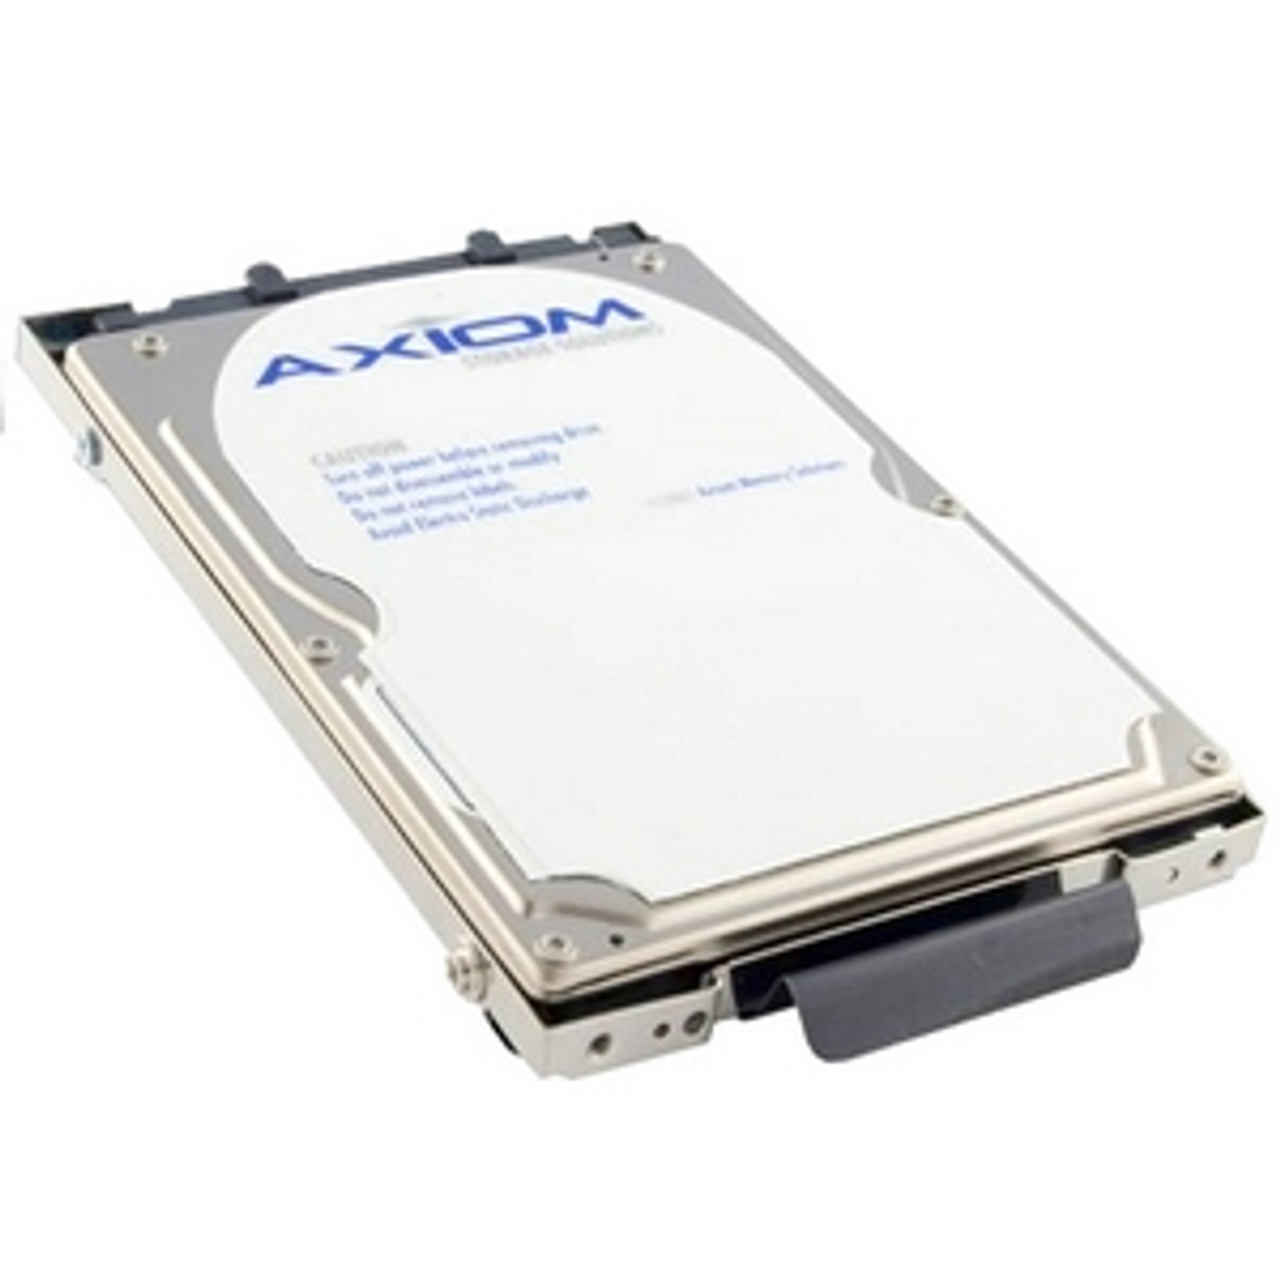 AXM-0320 - Axiom 20 GB 2.5 Plug-in Module Hard Drive